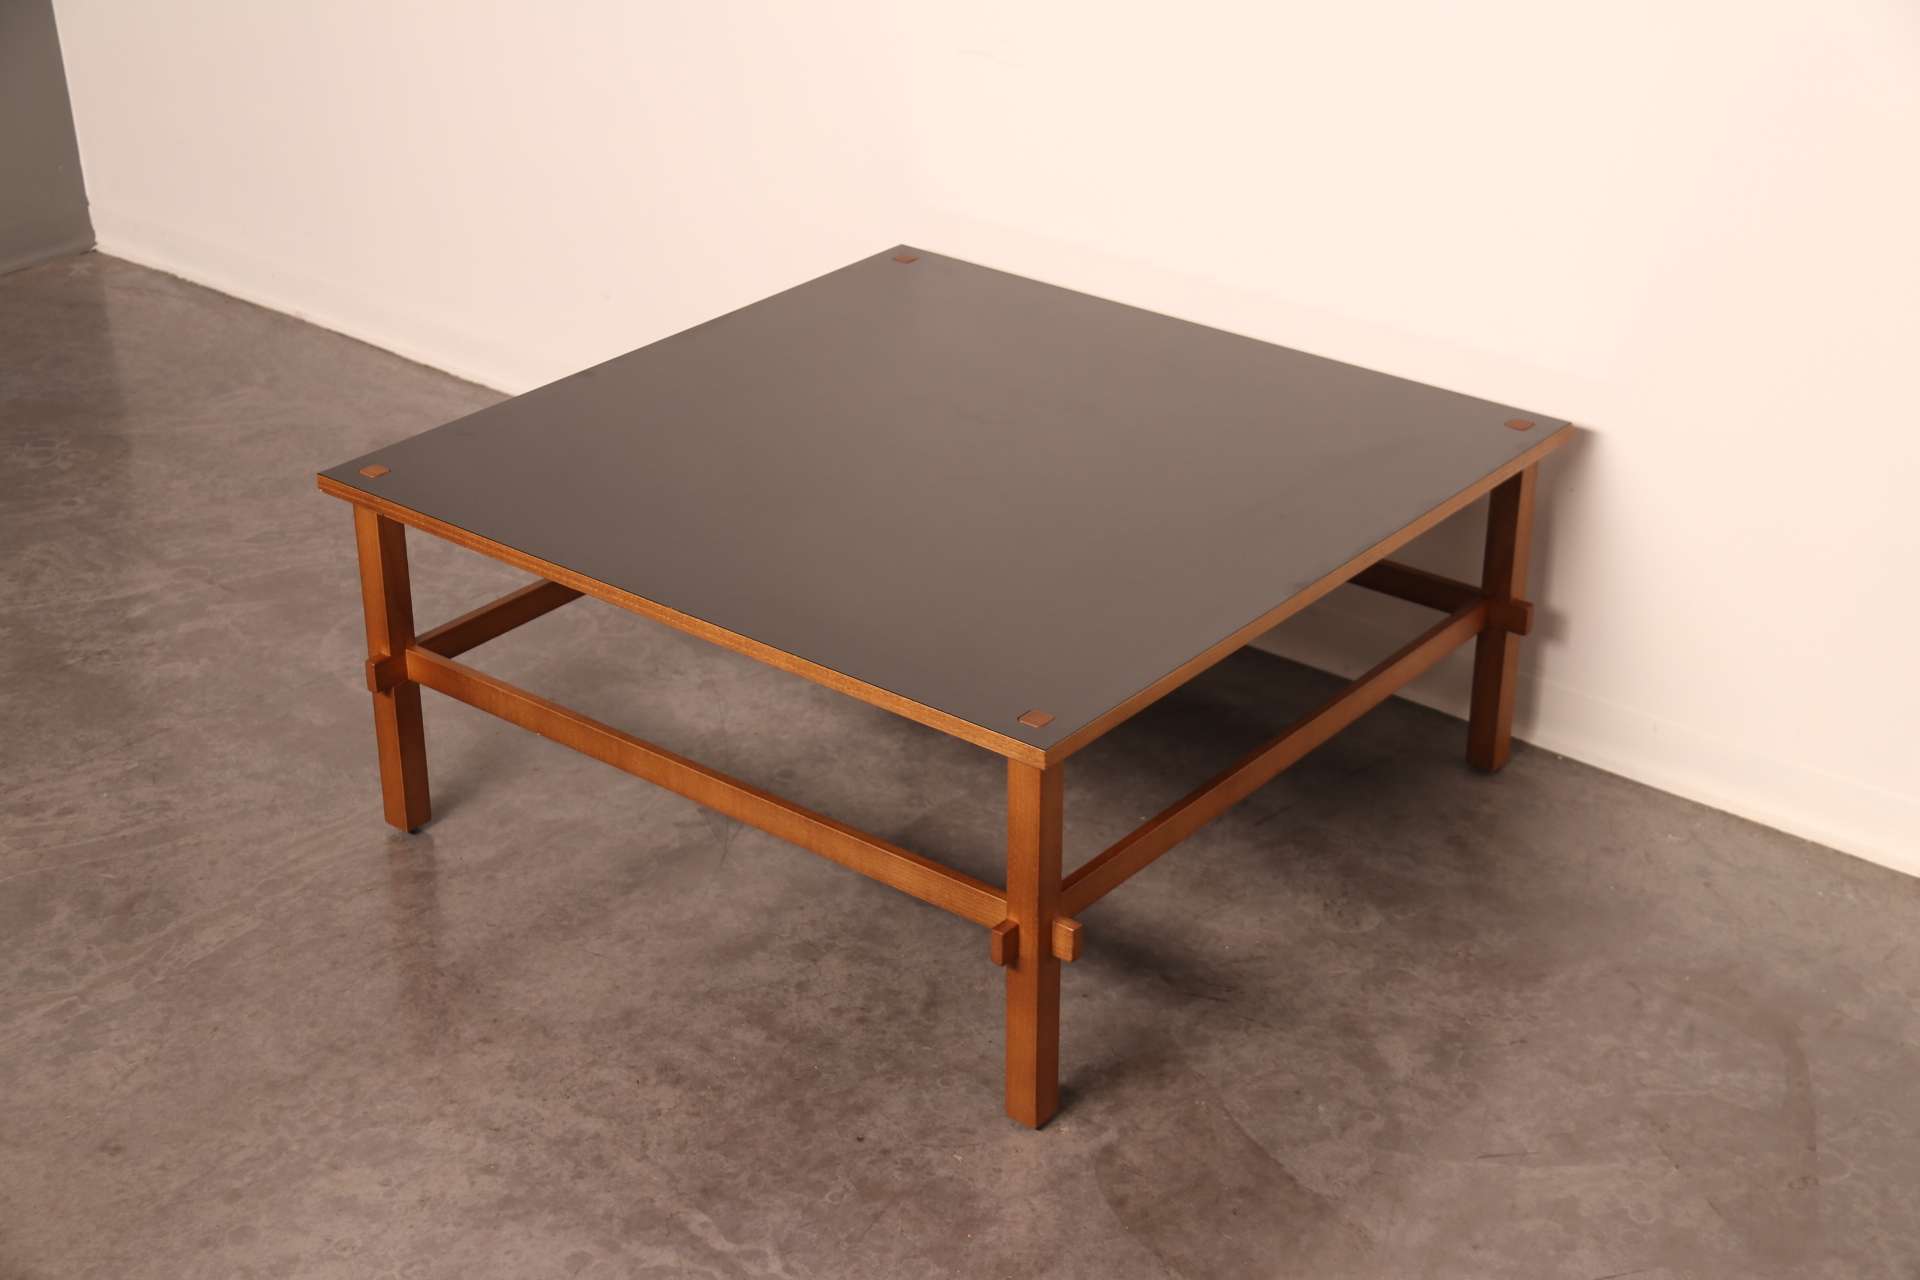 Gio coffee table design Frattini Cassina (4)